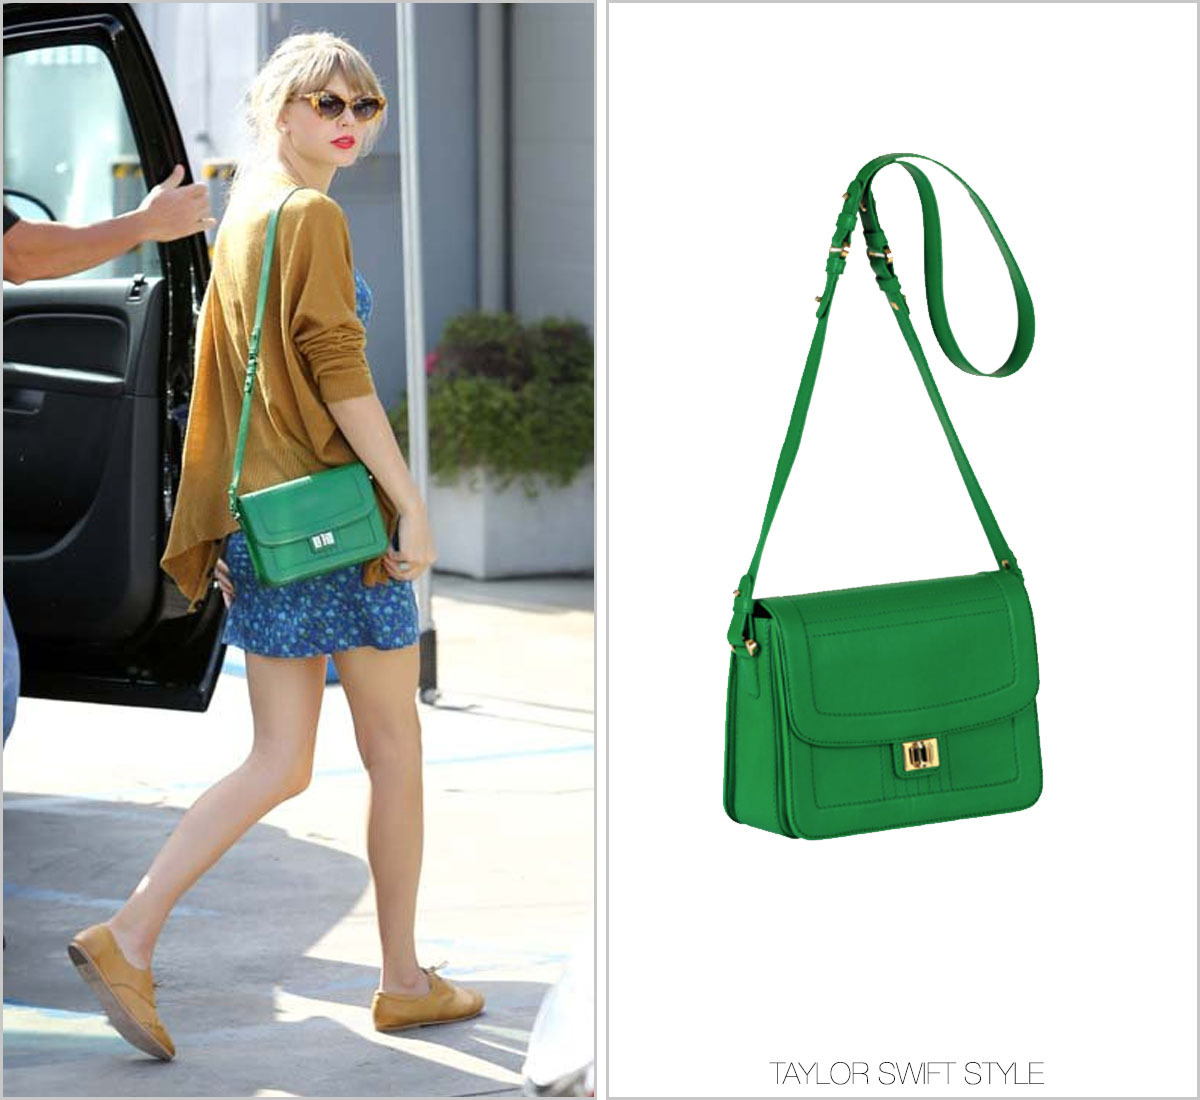 Taylor Swift Totes Her Elie Saab Bag: Photo 2667345